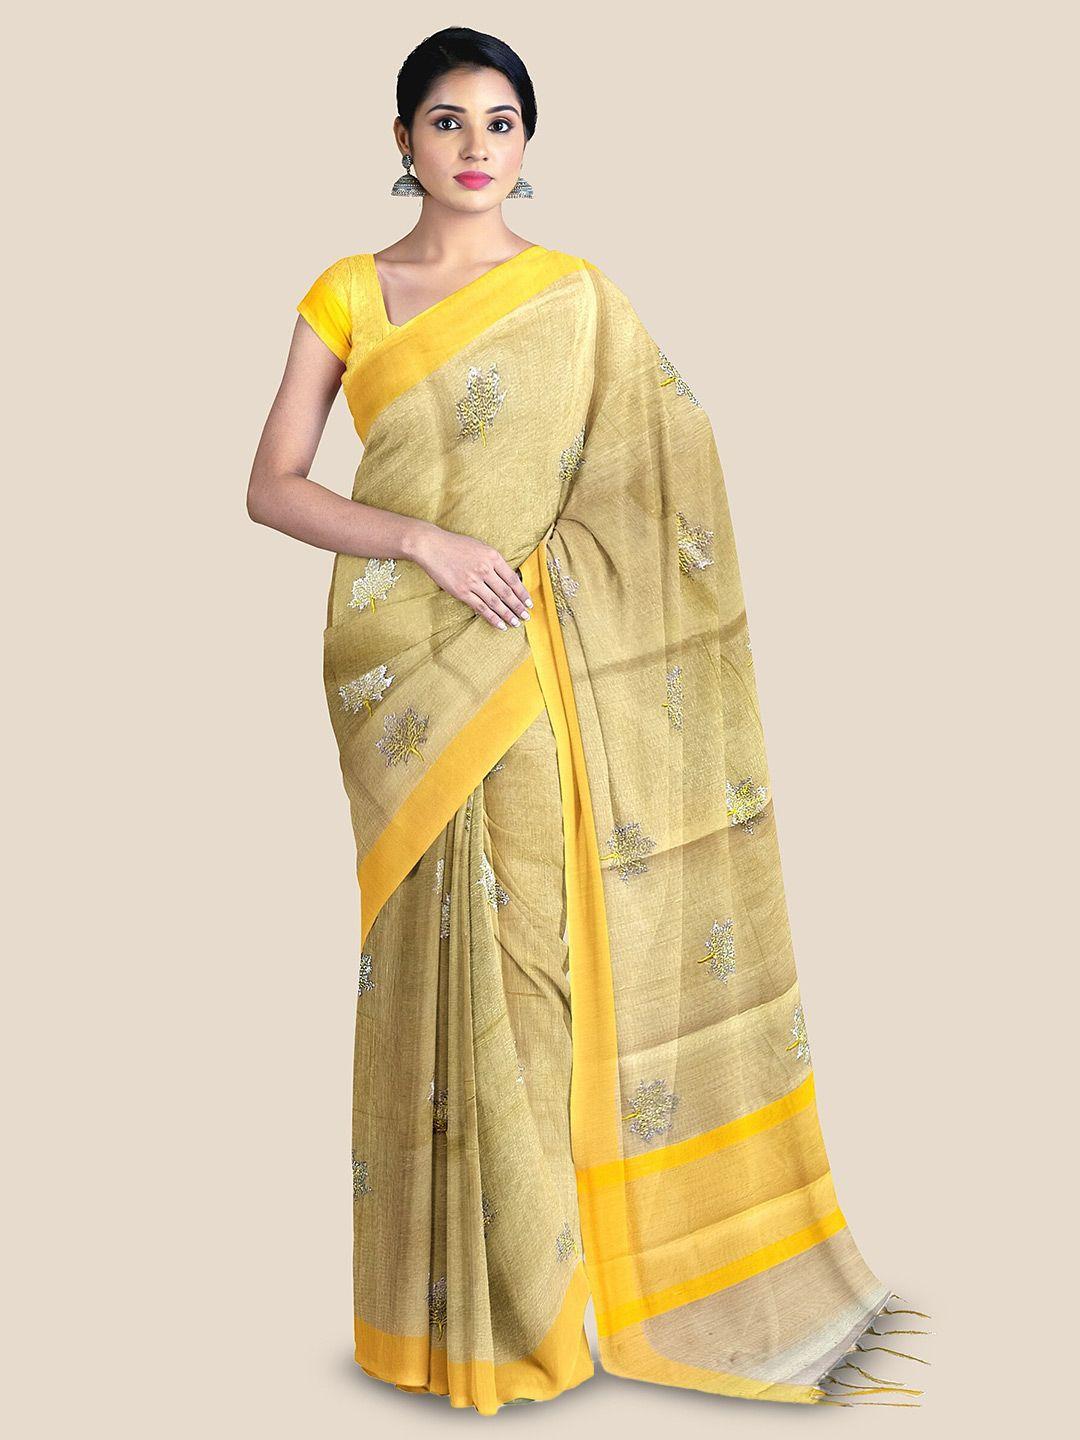 the chennai silks floral embroidered tissue banarasi saree